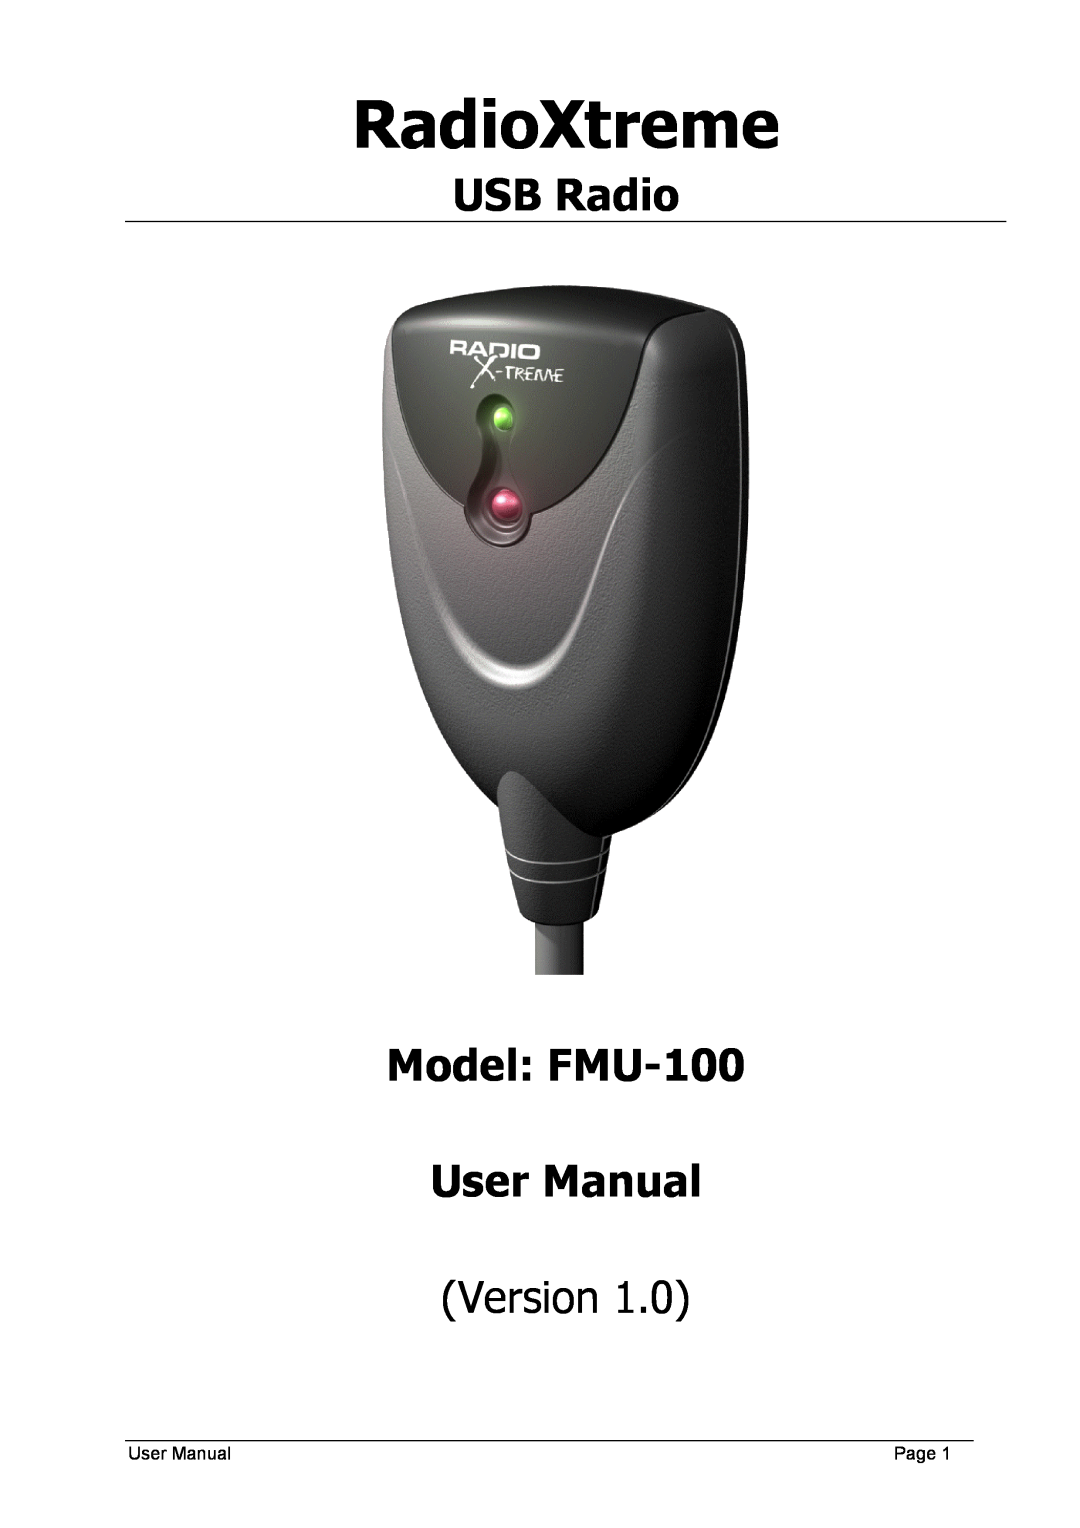 Philips FMU-100 user manual RadioXtreme, Version 